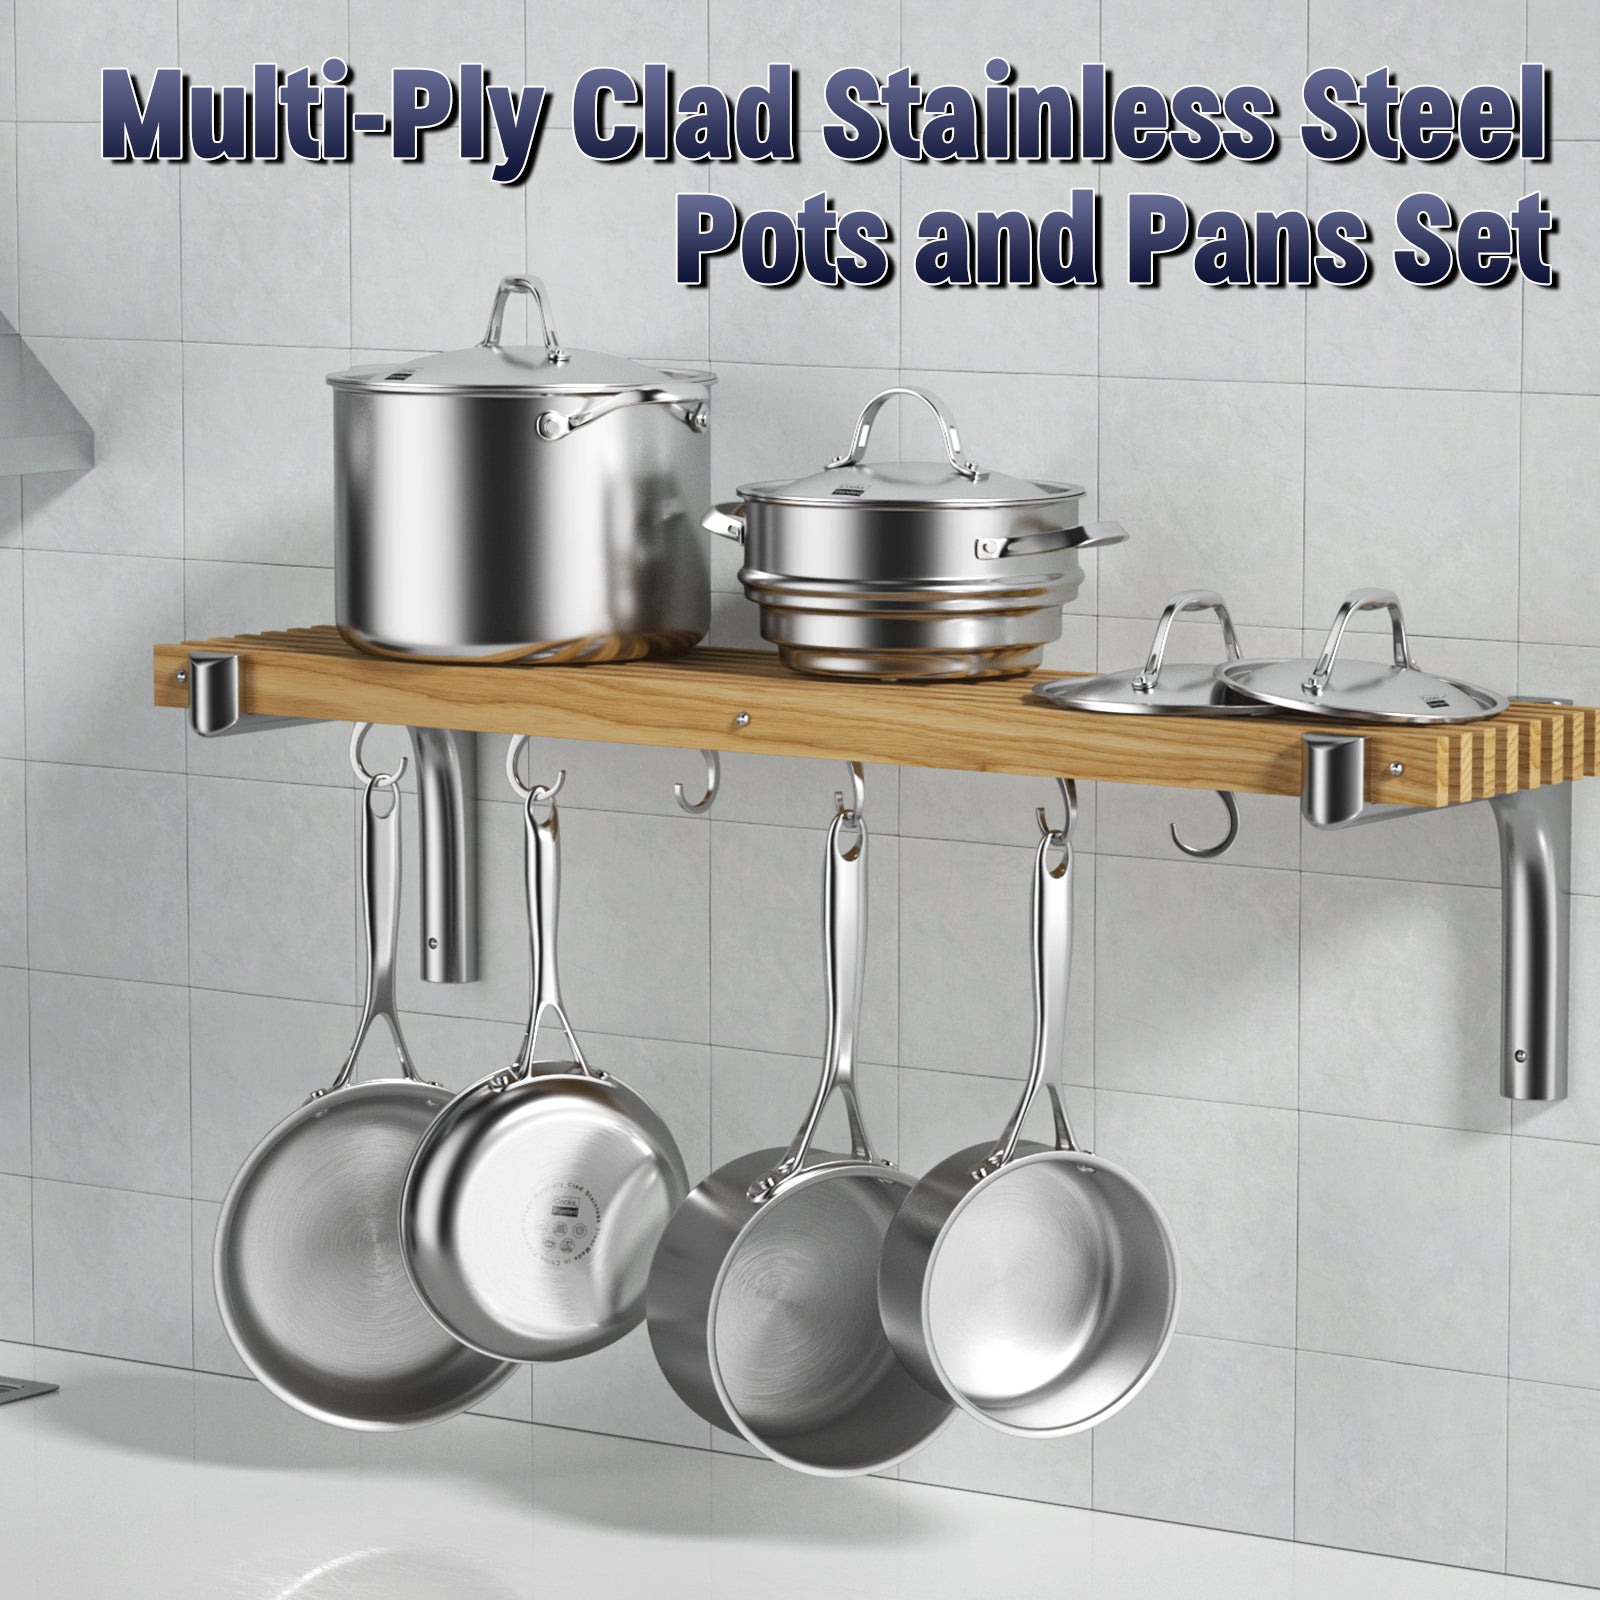 Cooks Standard Stockpots Stainless Steel, 24 Quart Professional Grade